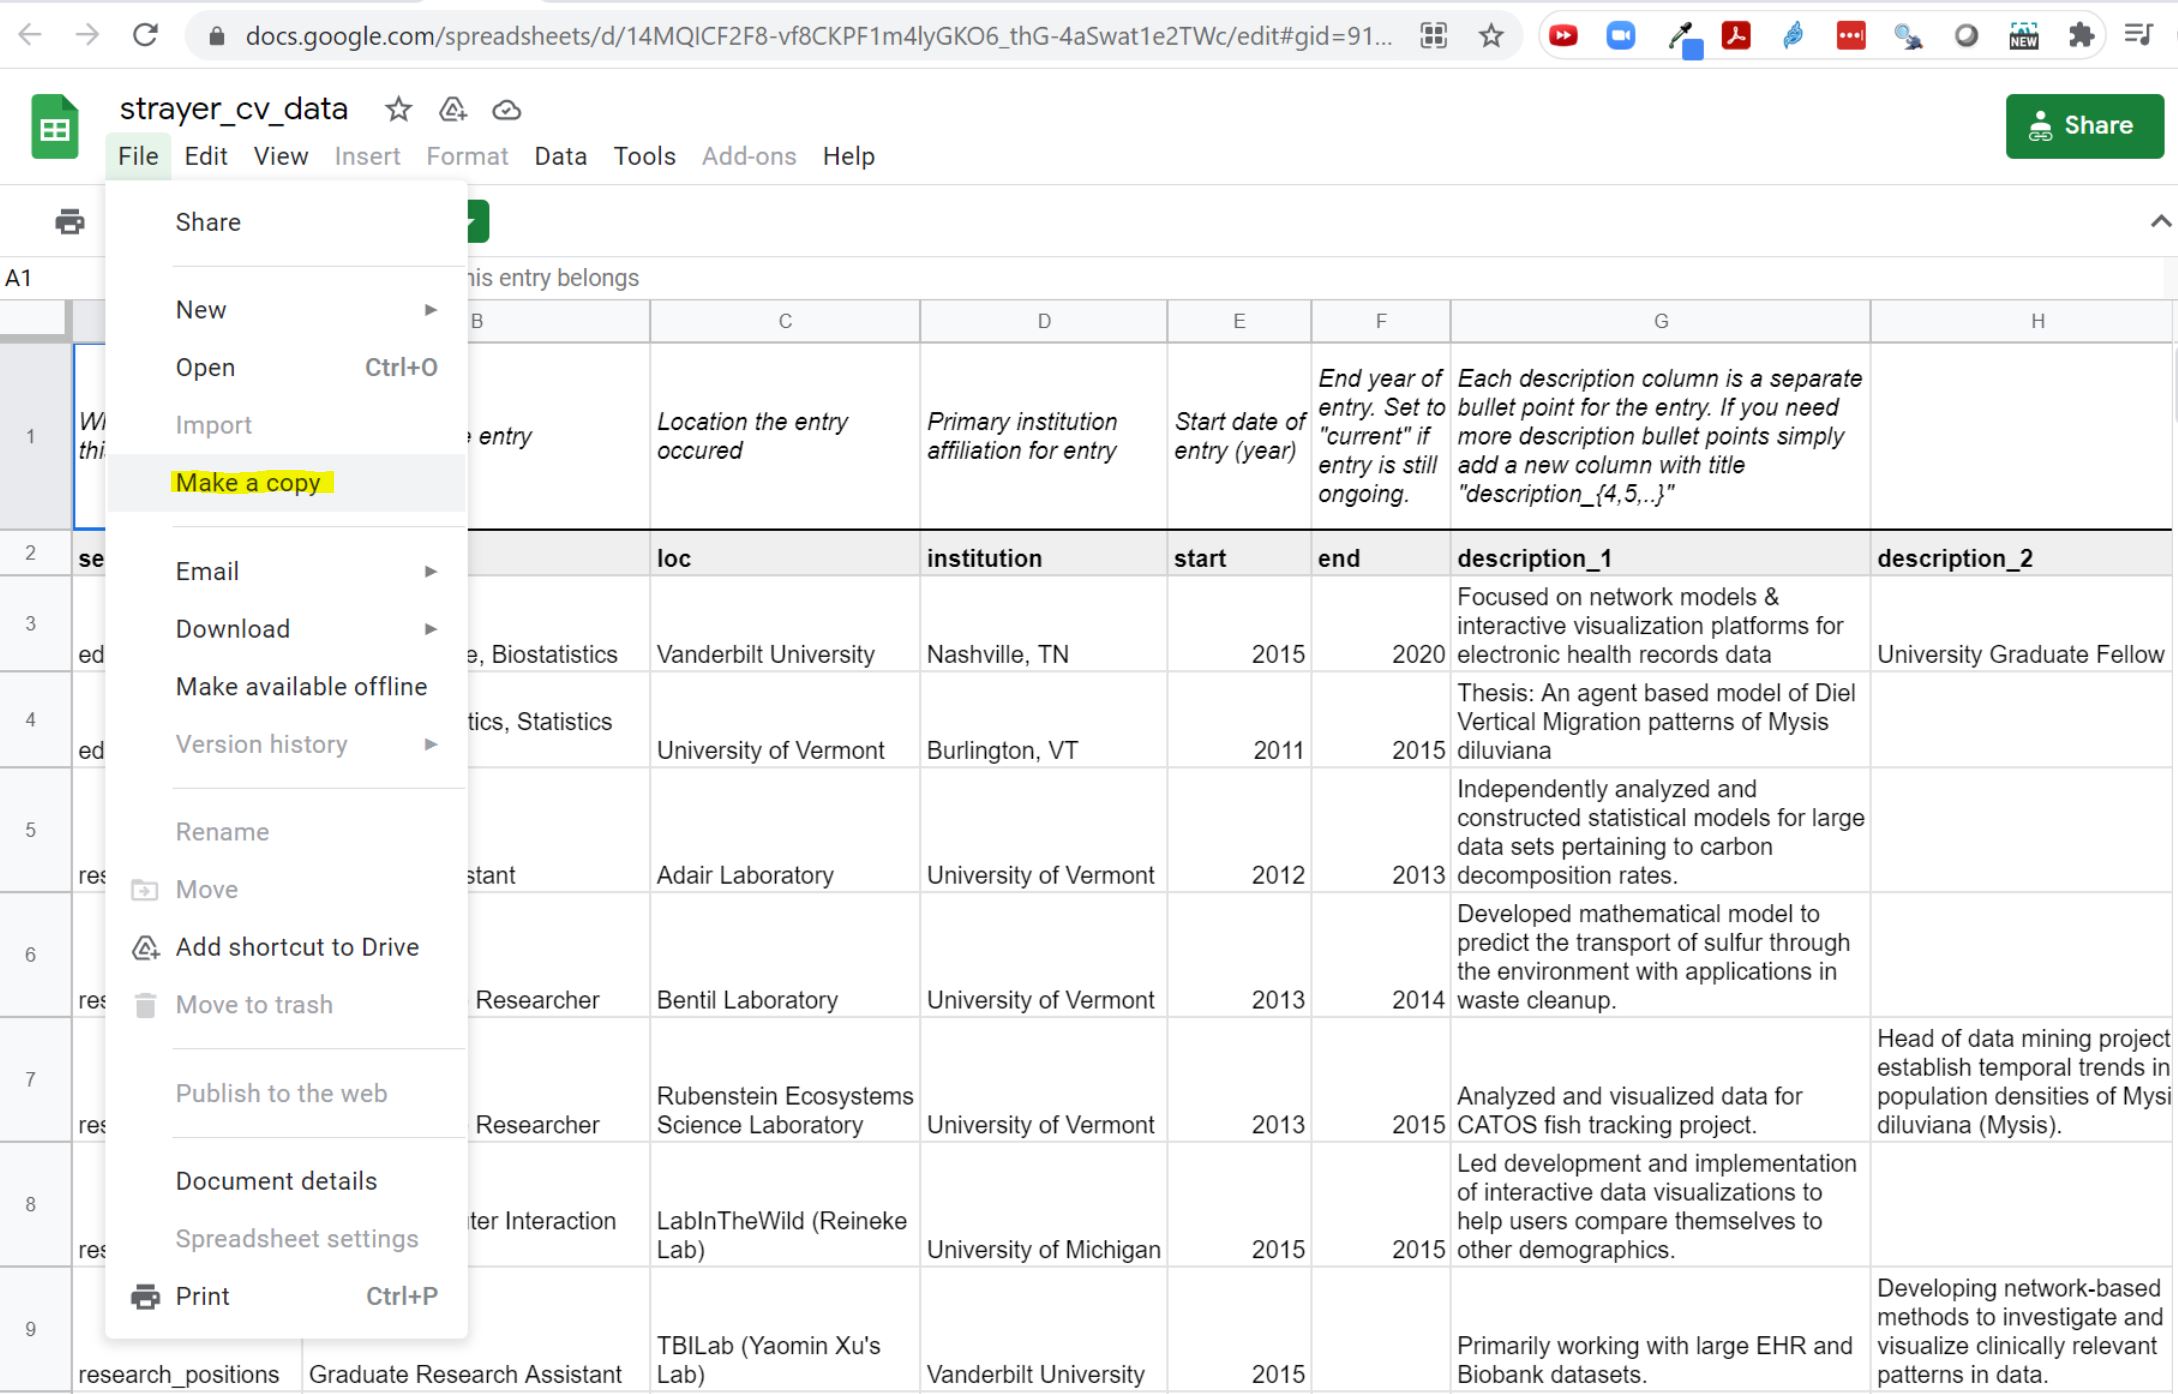 Make a copy of Nicholas Strayer's google sheet containing his resume data